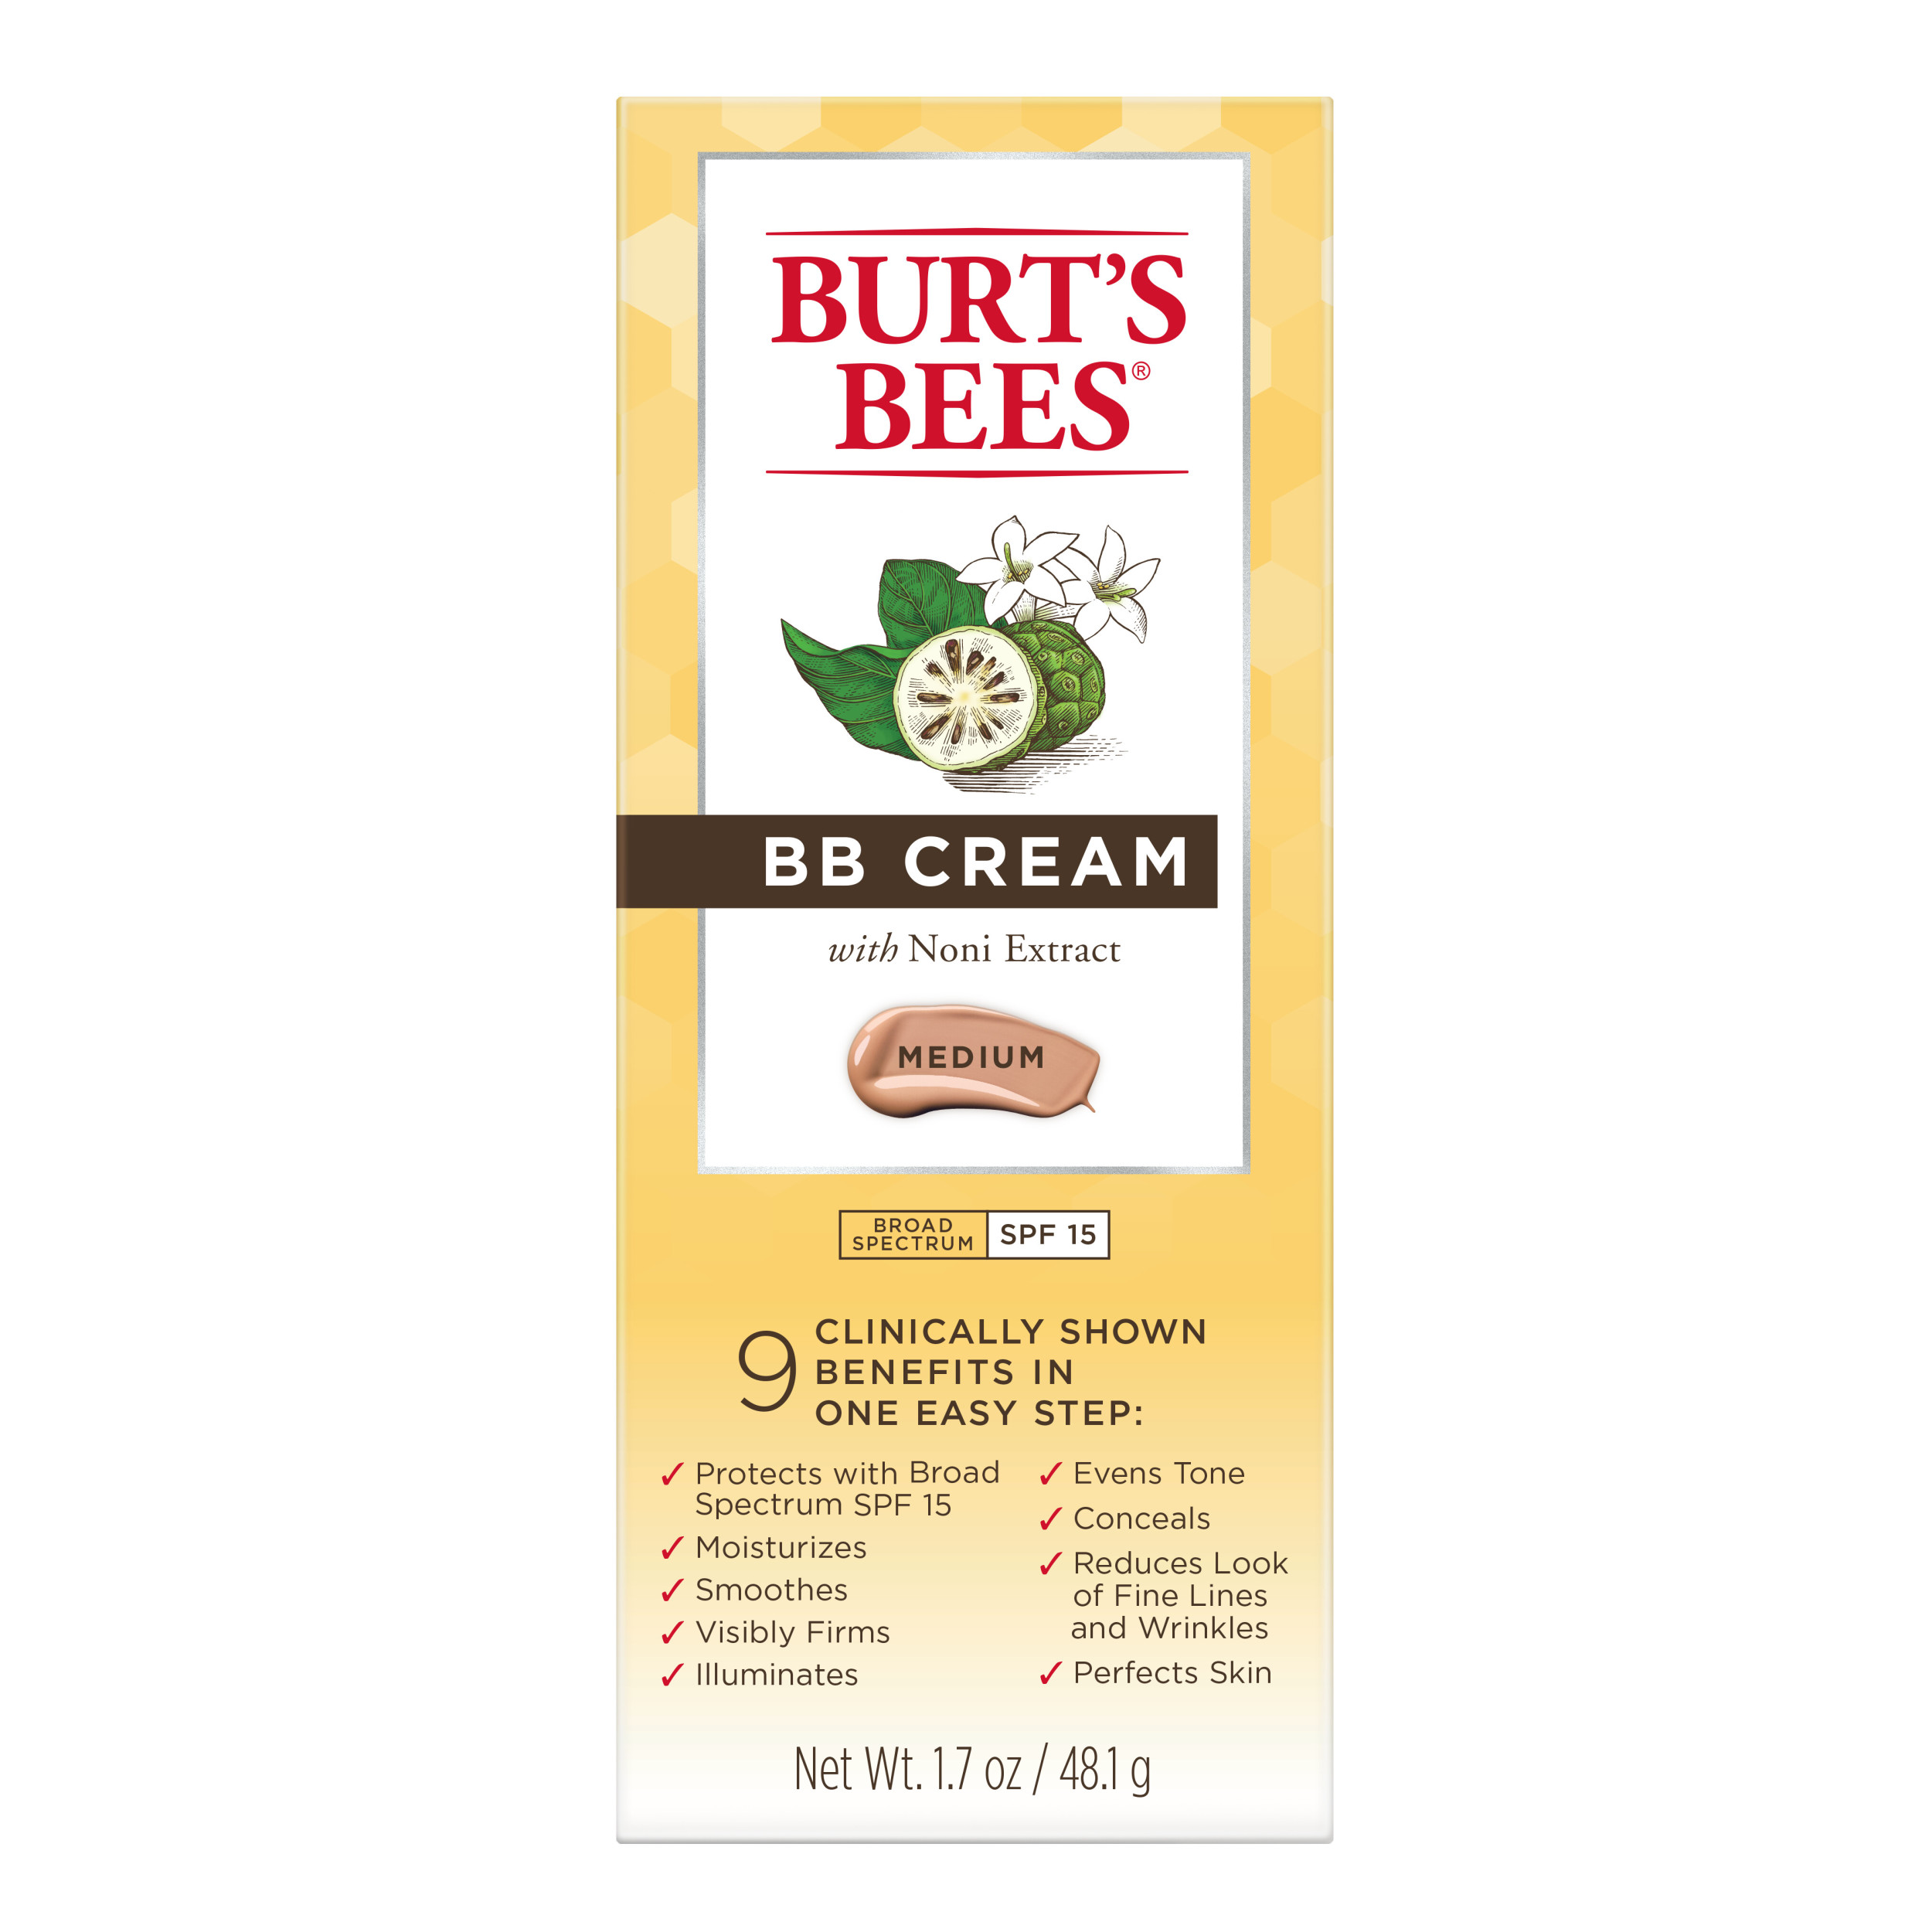 Burt's Bees BB Cream, SPF 15, Medium, 1.7 oz - image 1 of 8